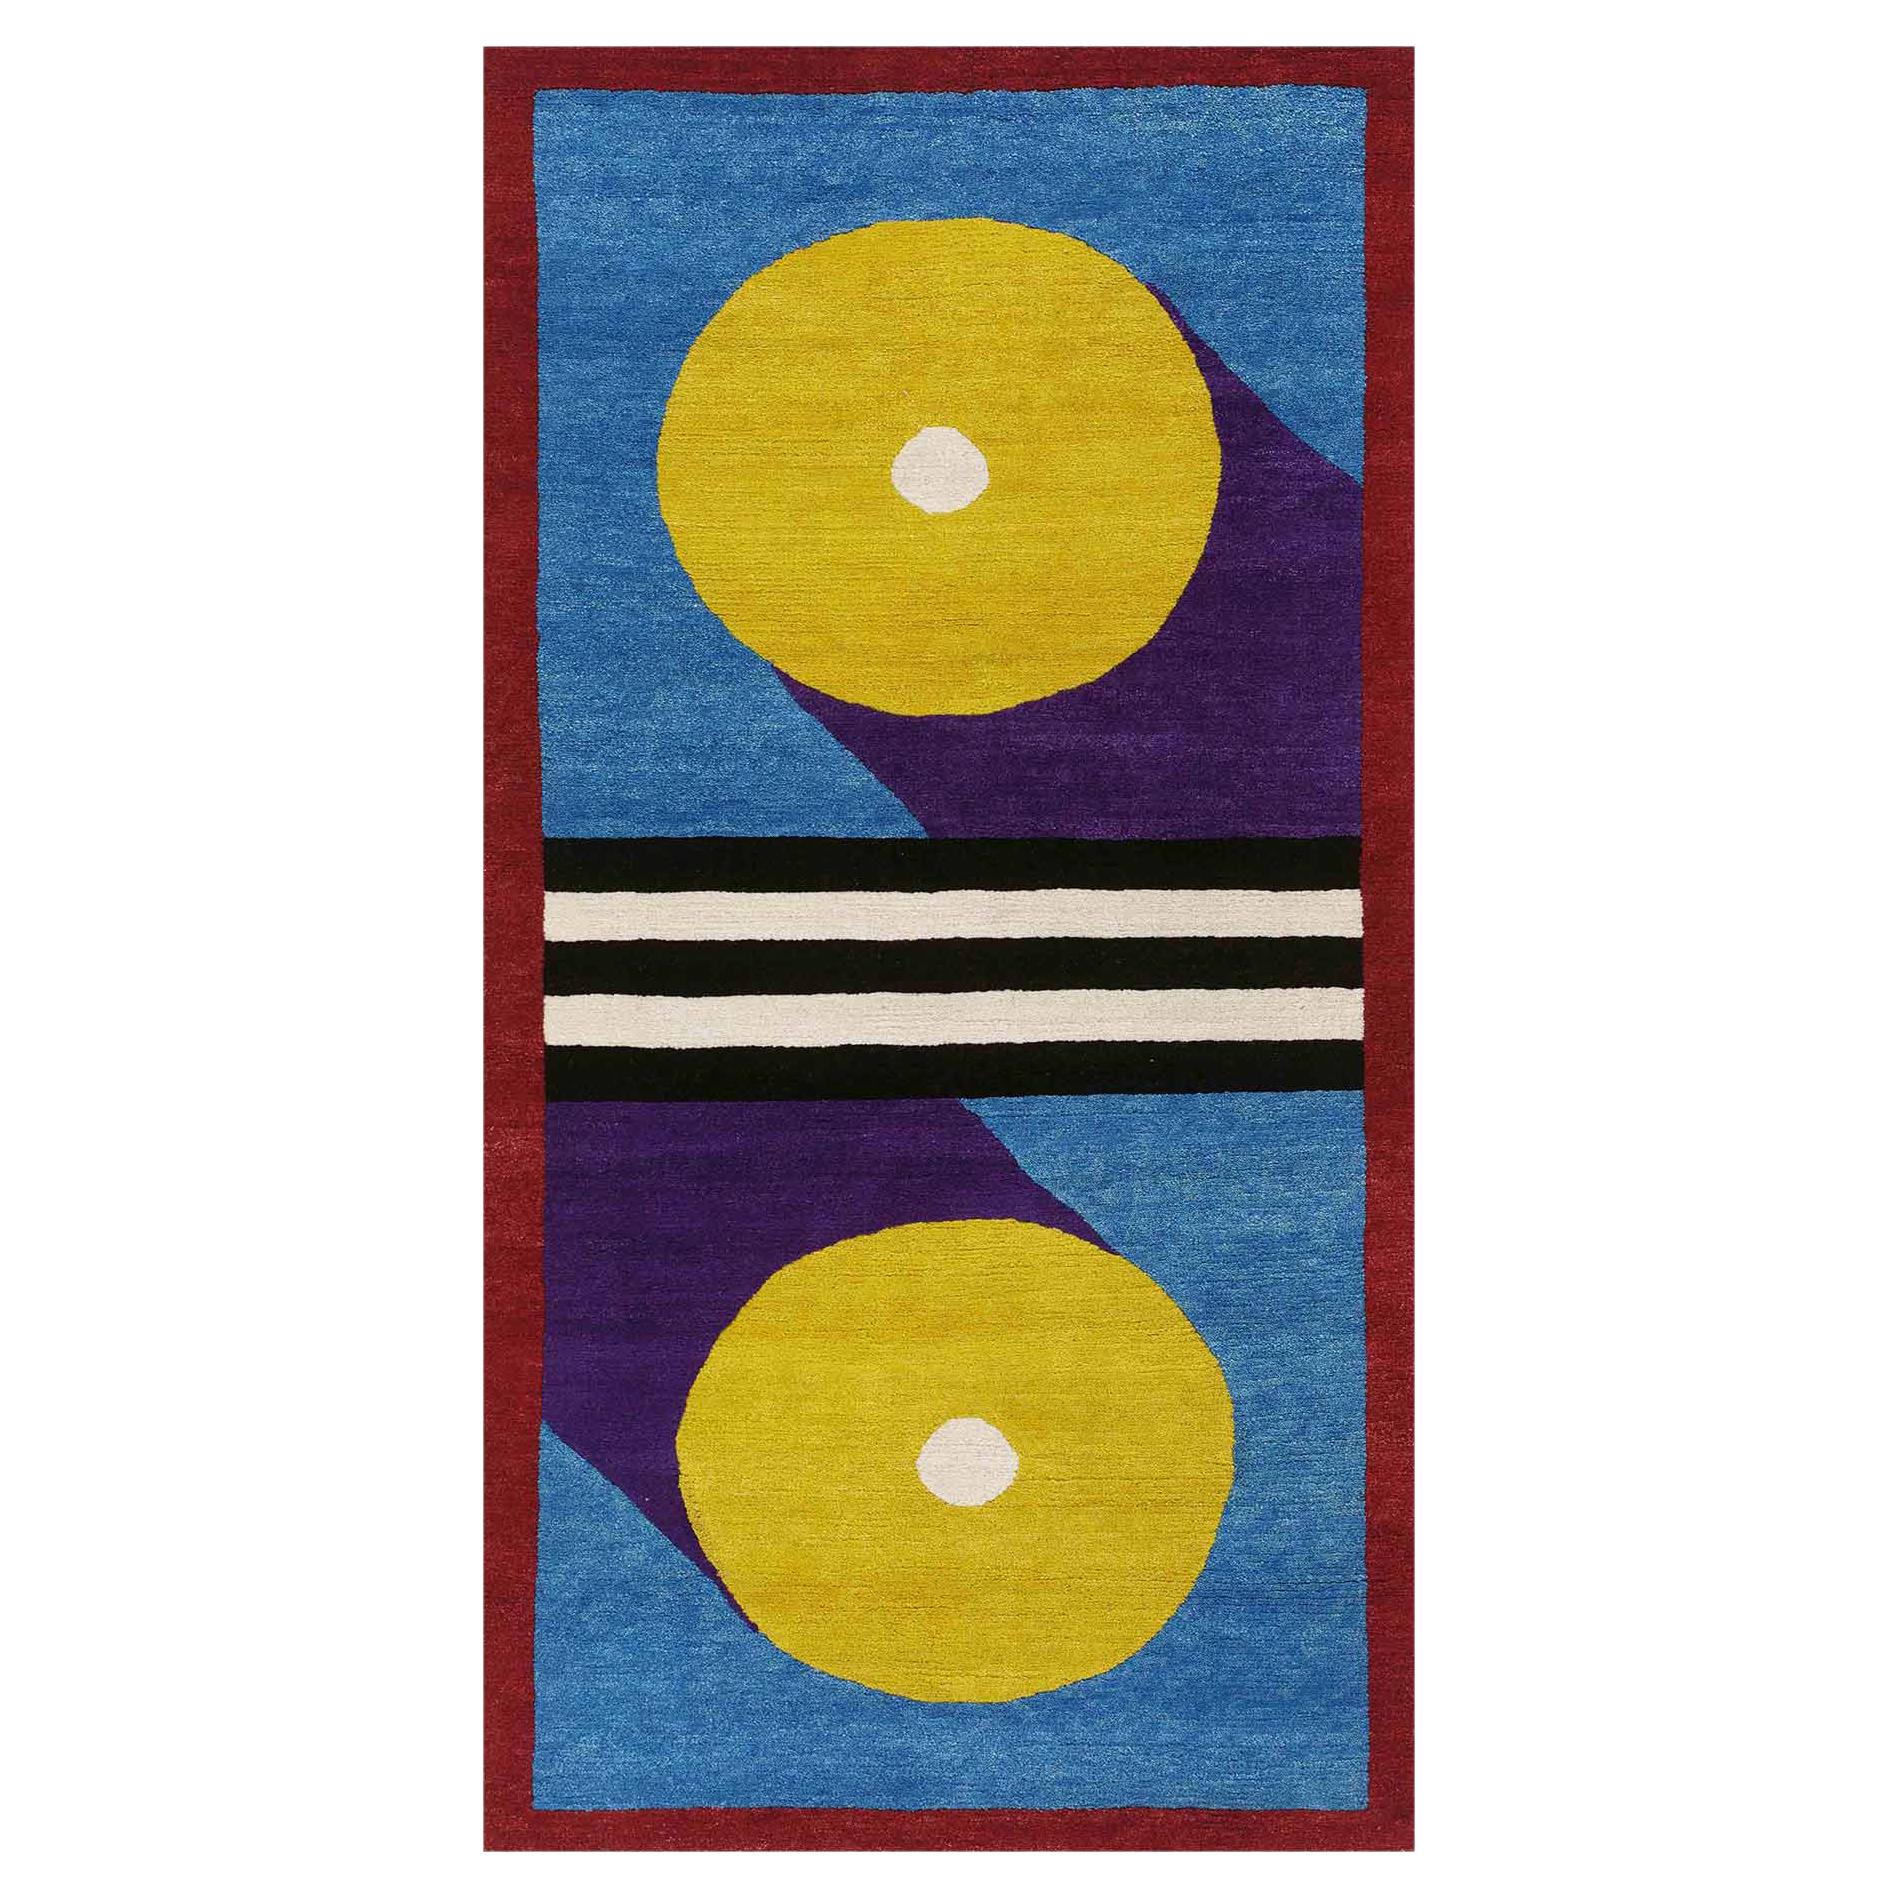 NDP31 Woollen Carpet by Nathalie Du Pasquier for Post Design Collection/Memphis